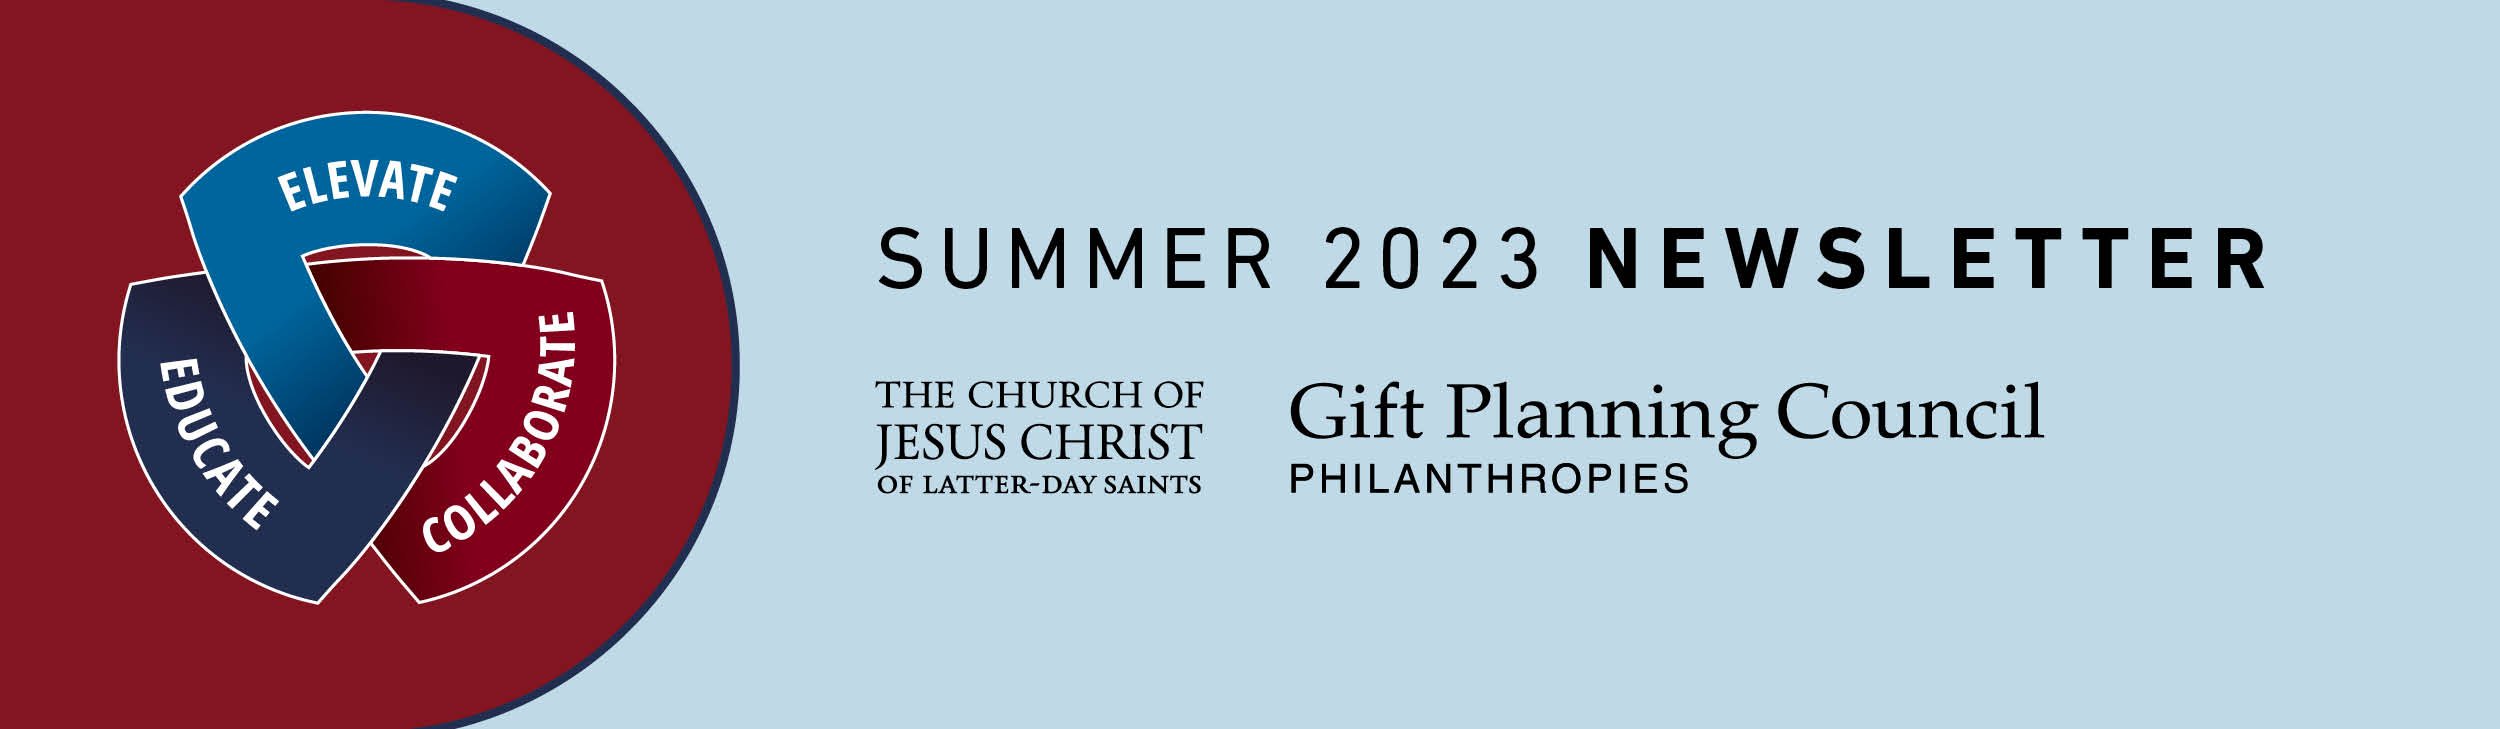 Gift Planning Council Summer 2023 Newsletter